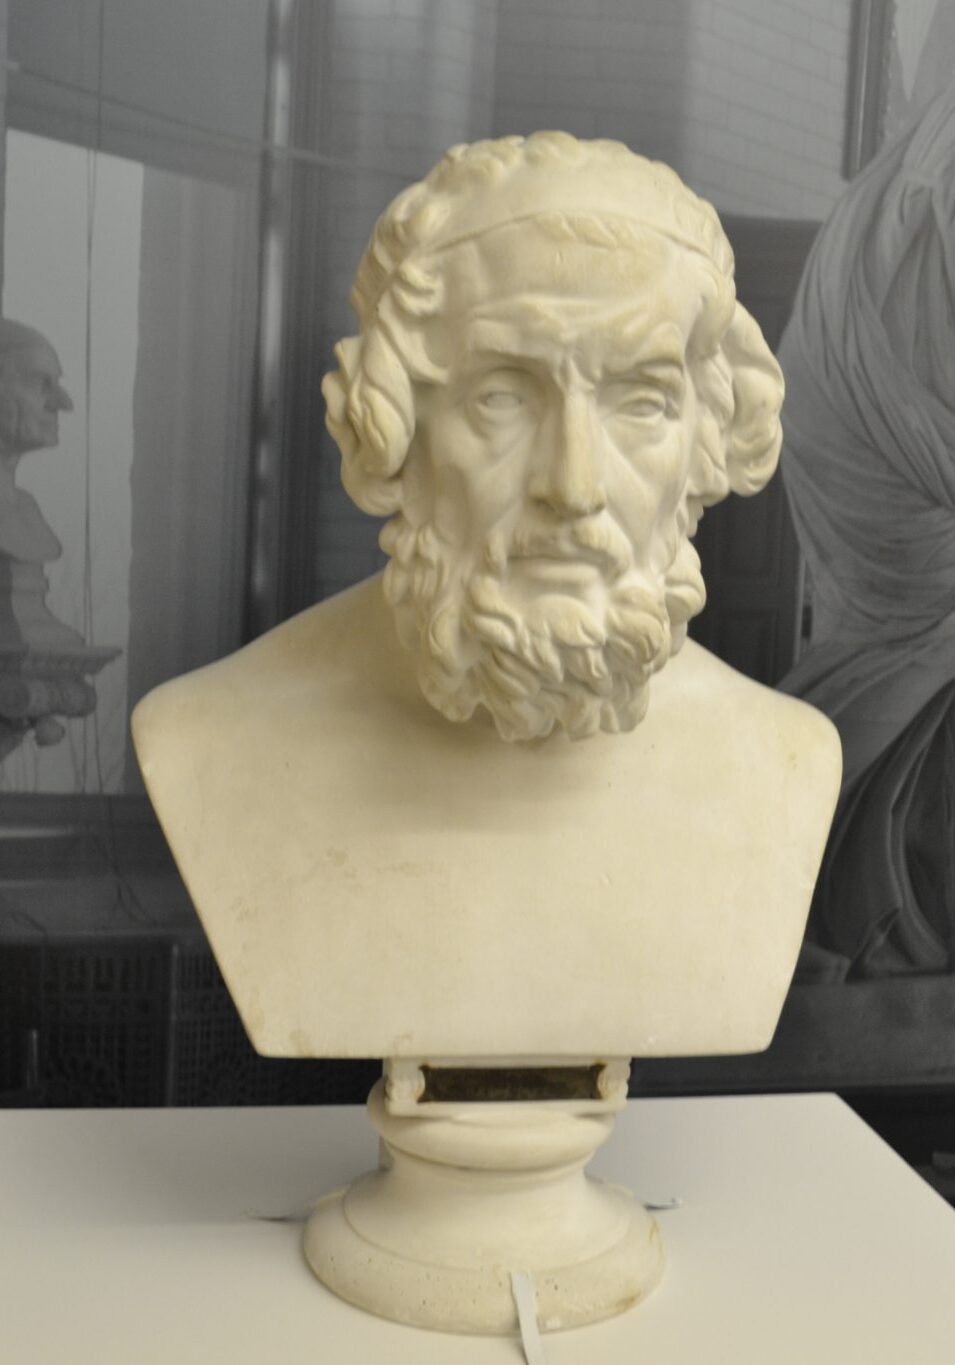 <p>Reproduction of Portrait Bust of Homer.</p><p>1894. Plaster.</p><p>Department of the Classics, Colgate University.</p><p>Photo by Erica Hiddink '17.</p>